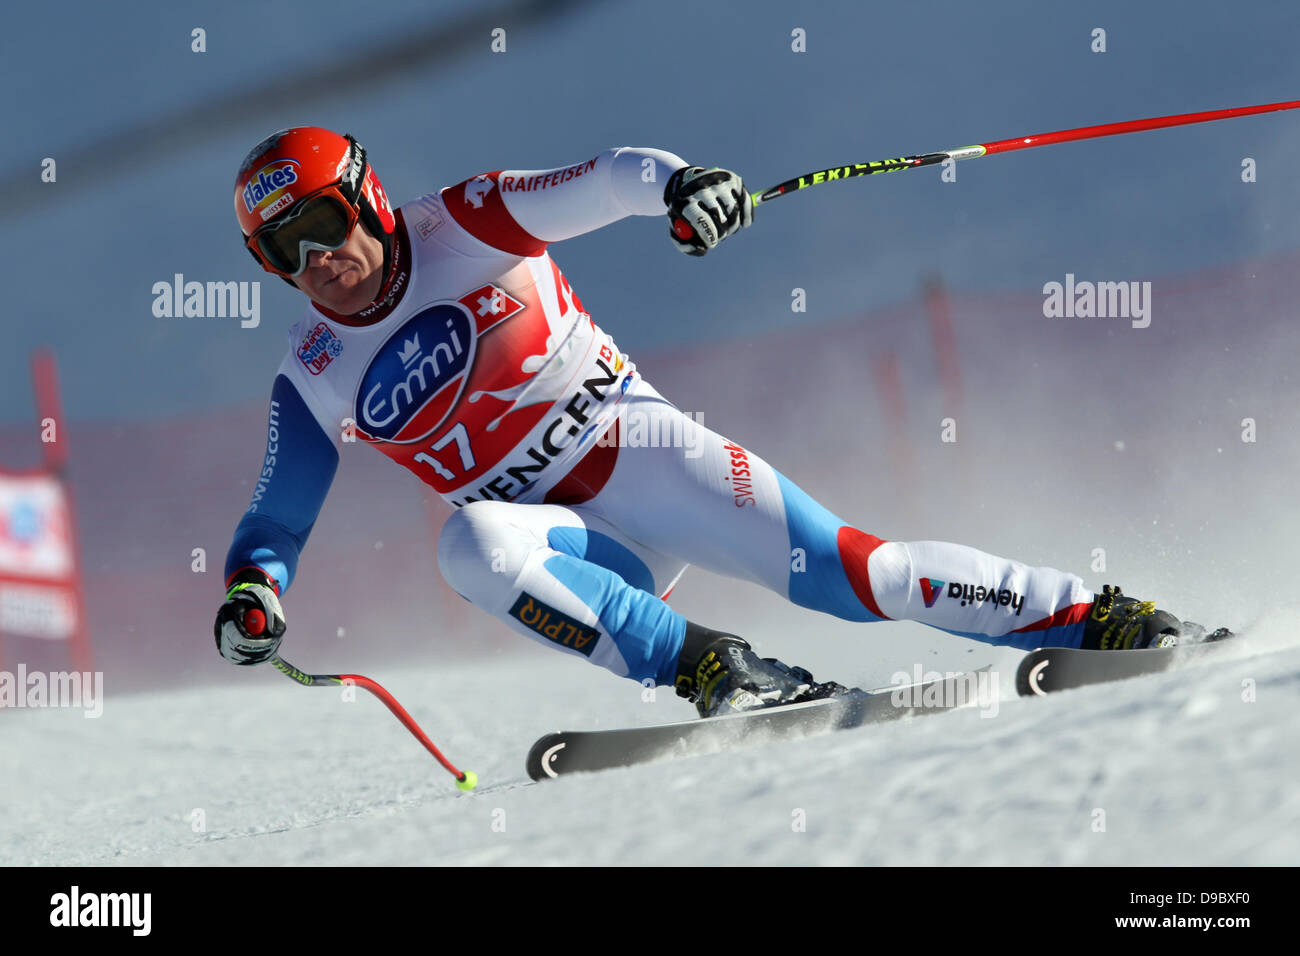 Didier Cuche Audi FIS Alpine Ski World Cup Kitzbühel, Austria - 25.01.12  Stock Photo - Alamy